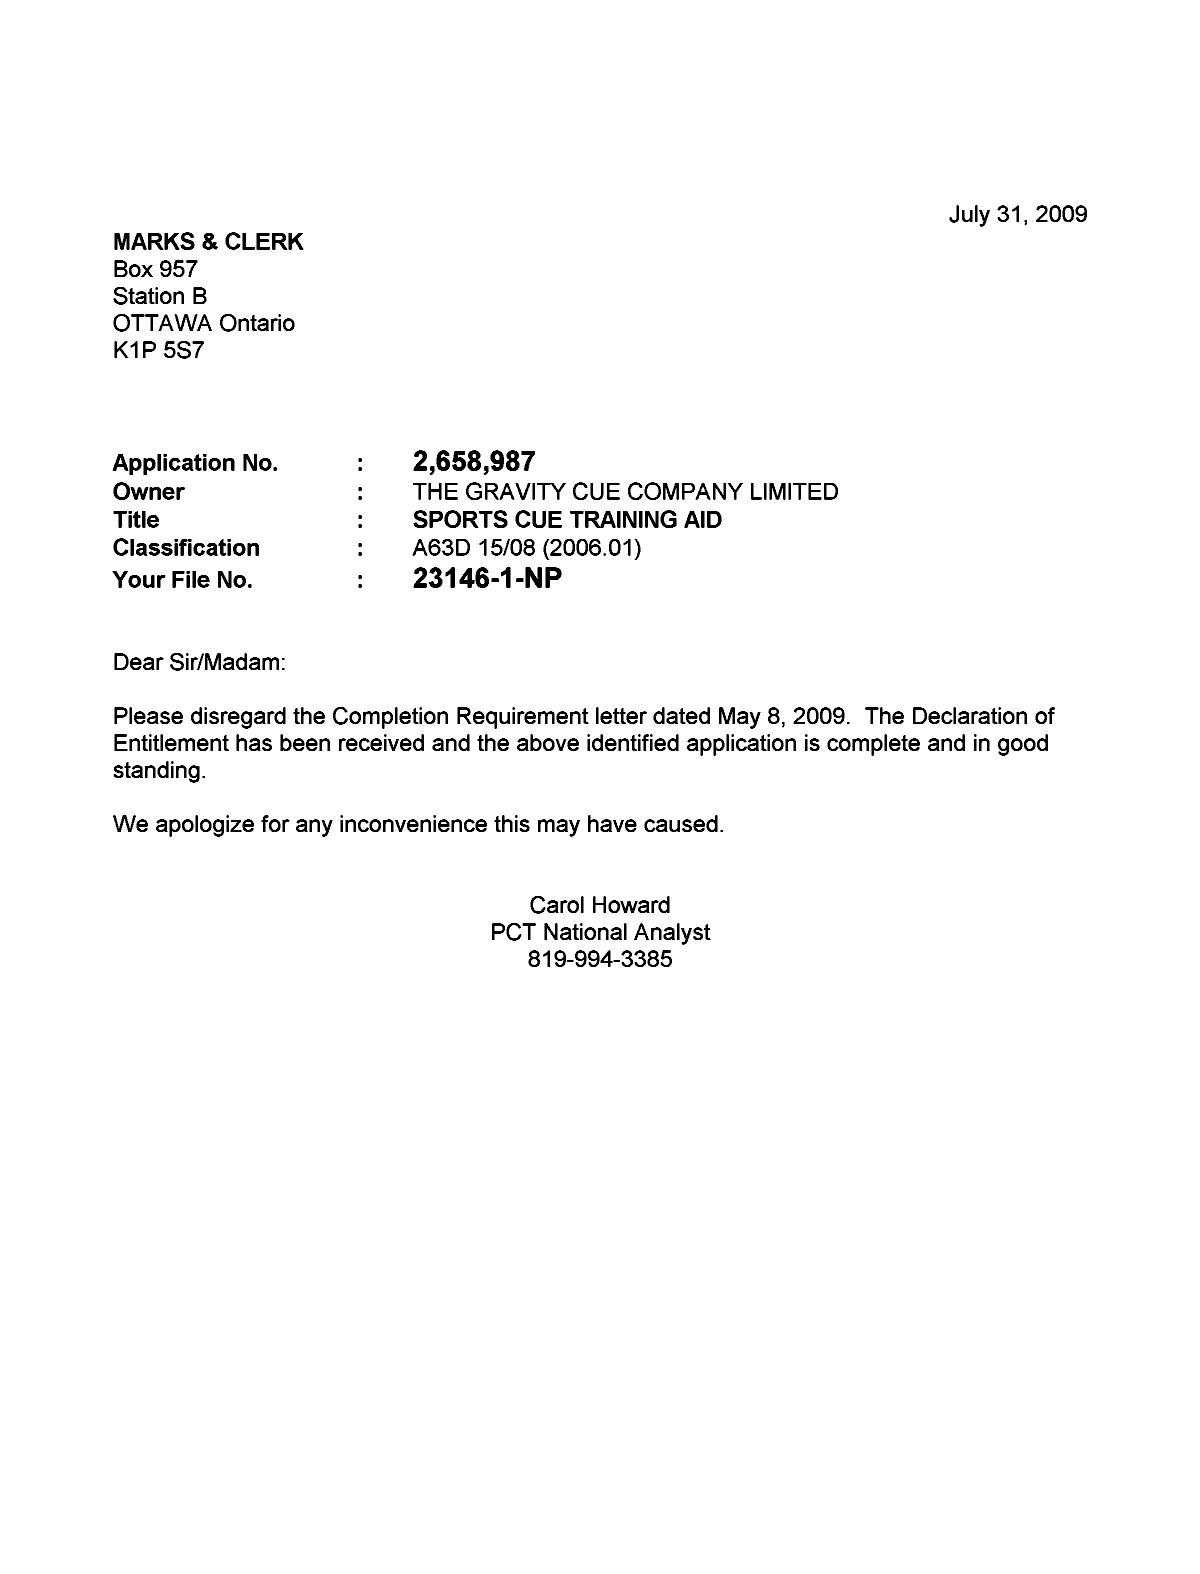 Canadian Patent Document 2658987. Correspondence 20090731. Image 1 of 1